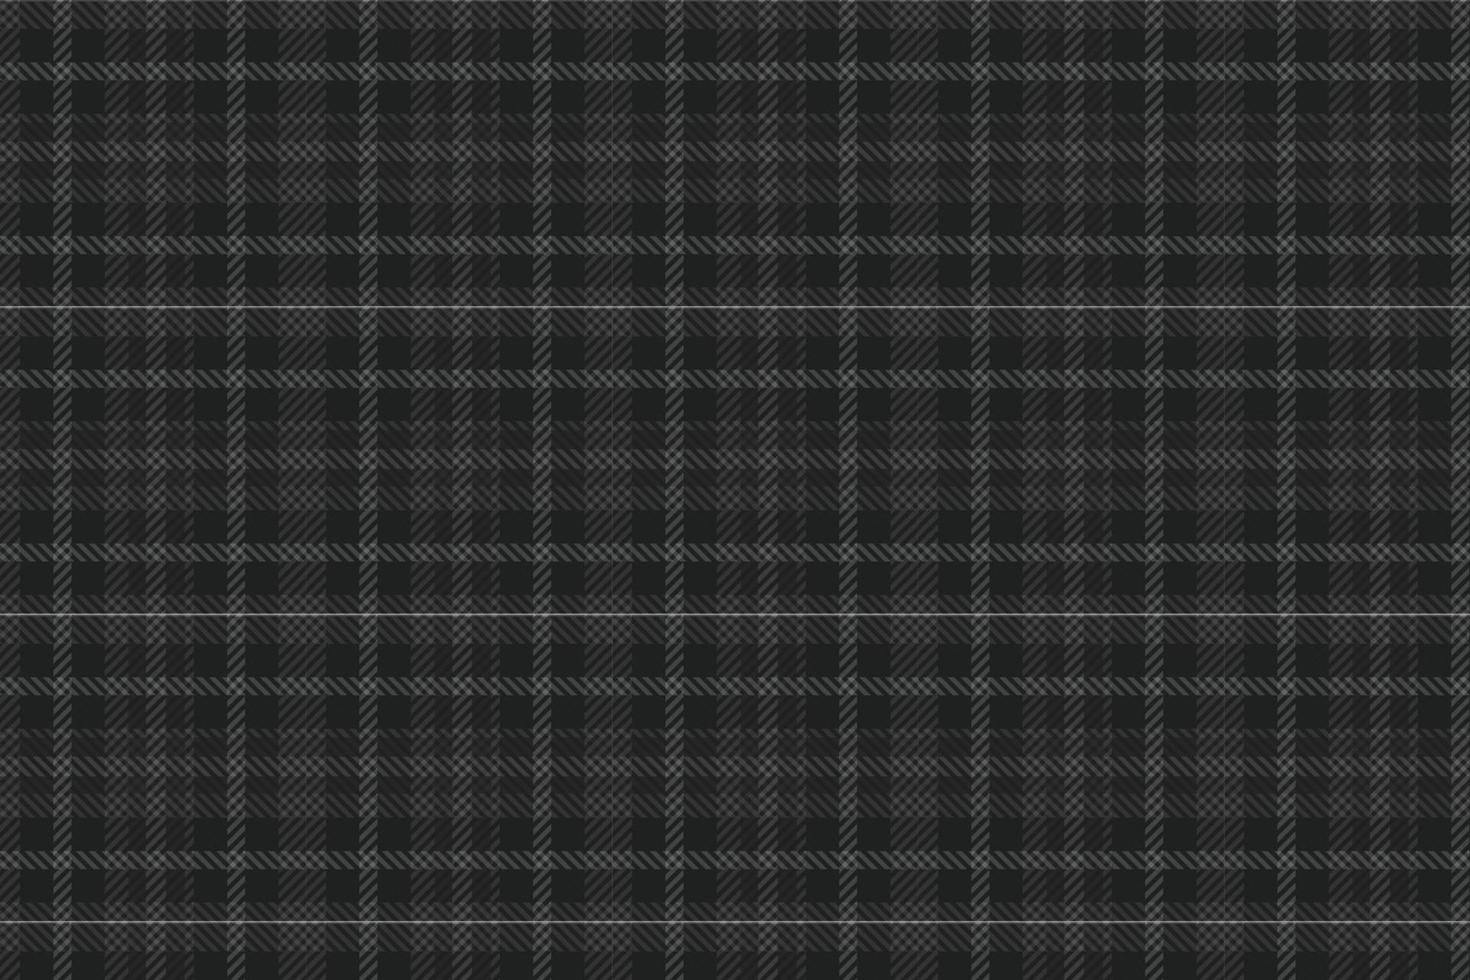 Plaid pattern seamless vector. Dark textured tartan check background vector